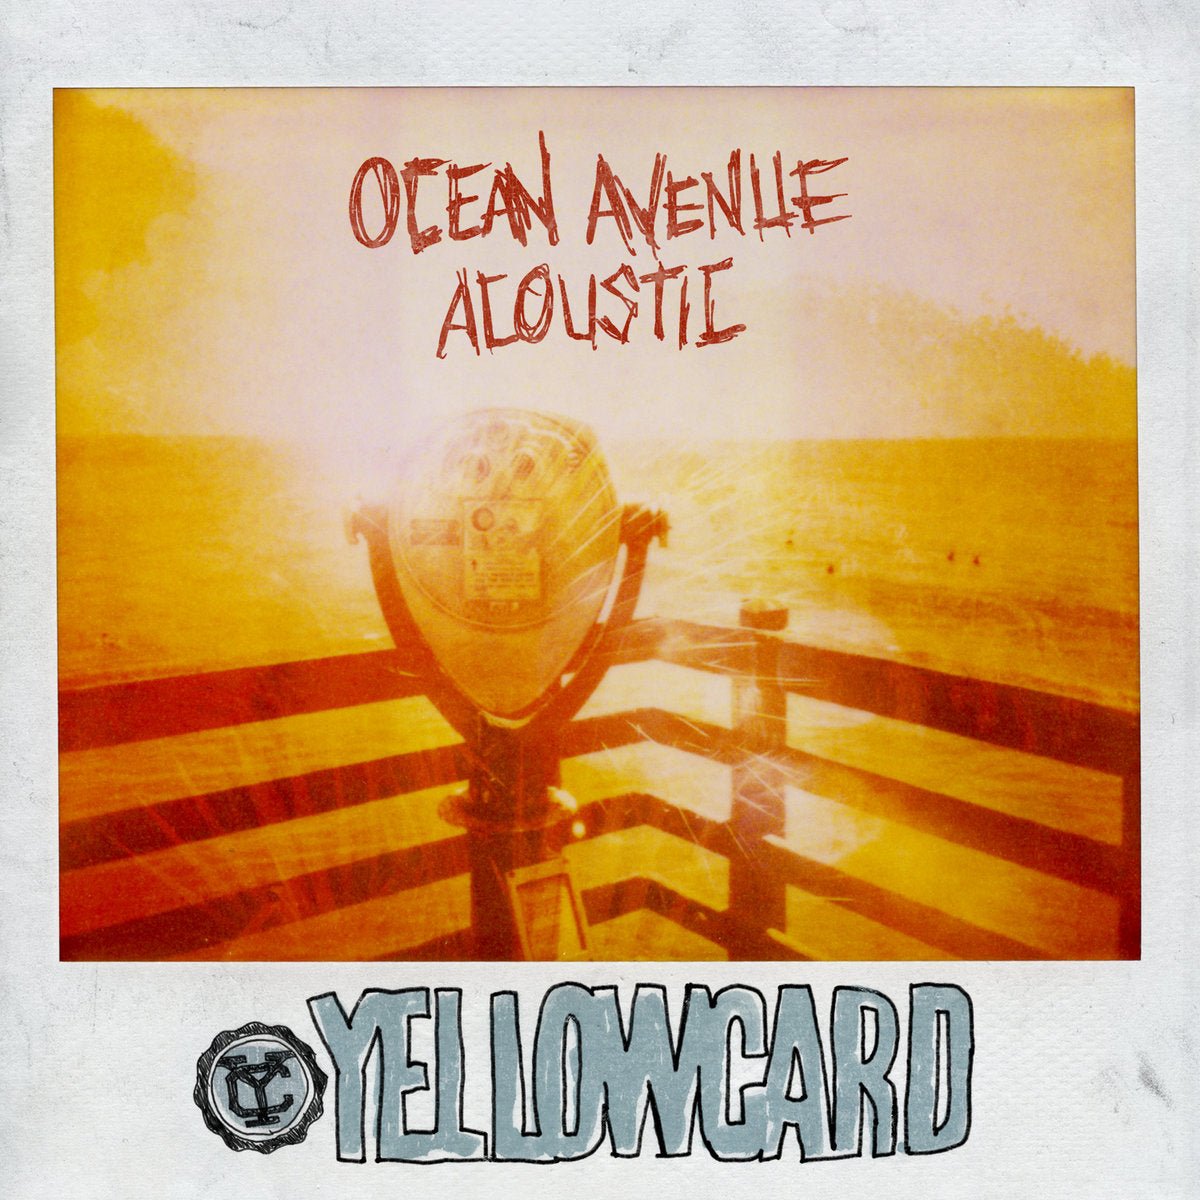 Yellowcard: Ocean Avenue Acoustic: Orange inside Yellow Vinyl LP - Steadfast Records